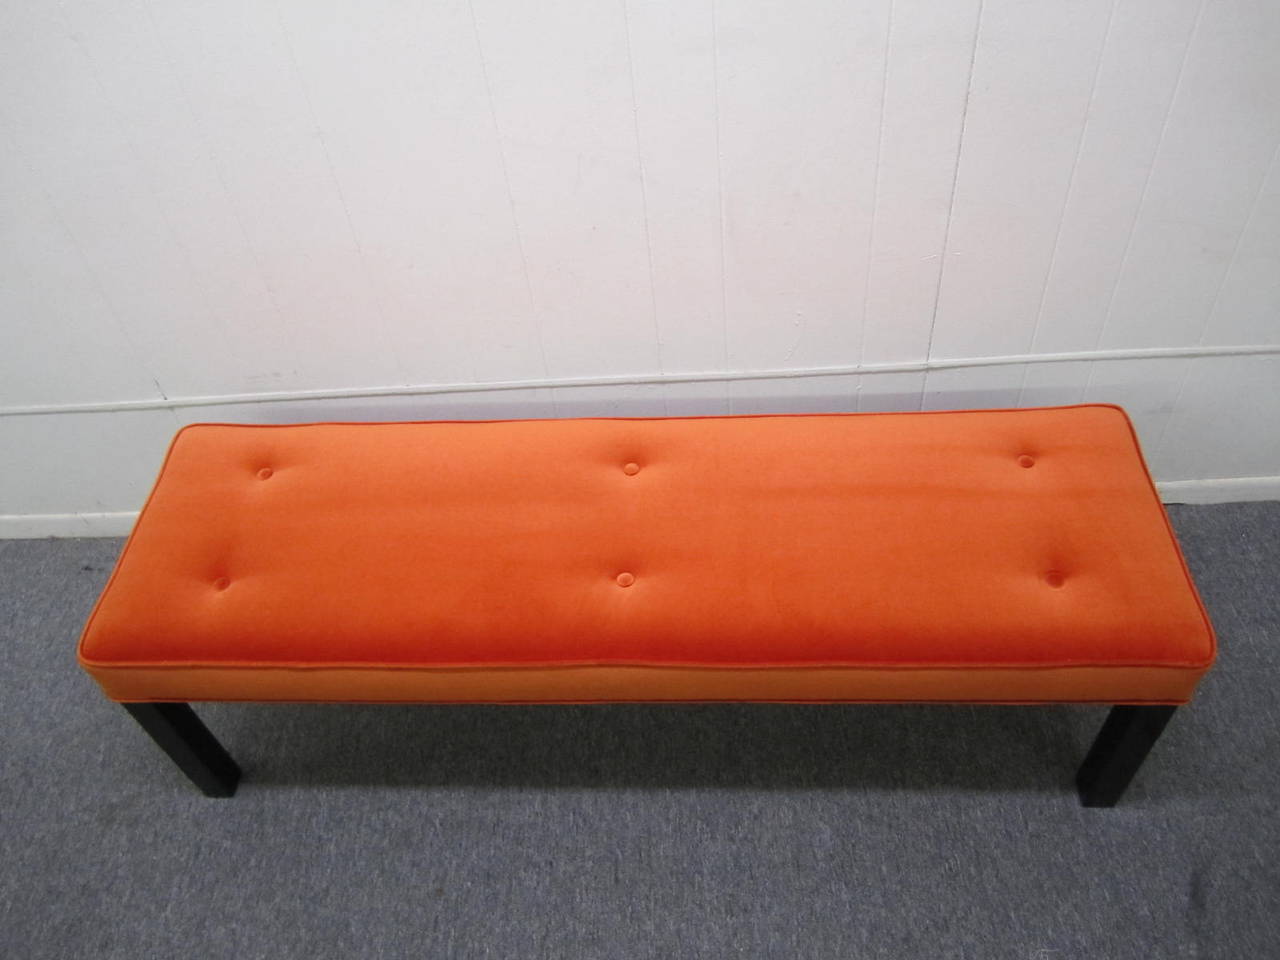 Gorgeous Probber style bench with new orange velvet upholstery